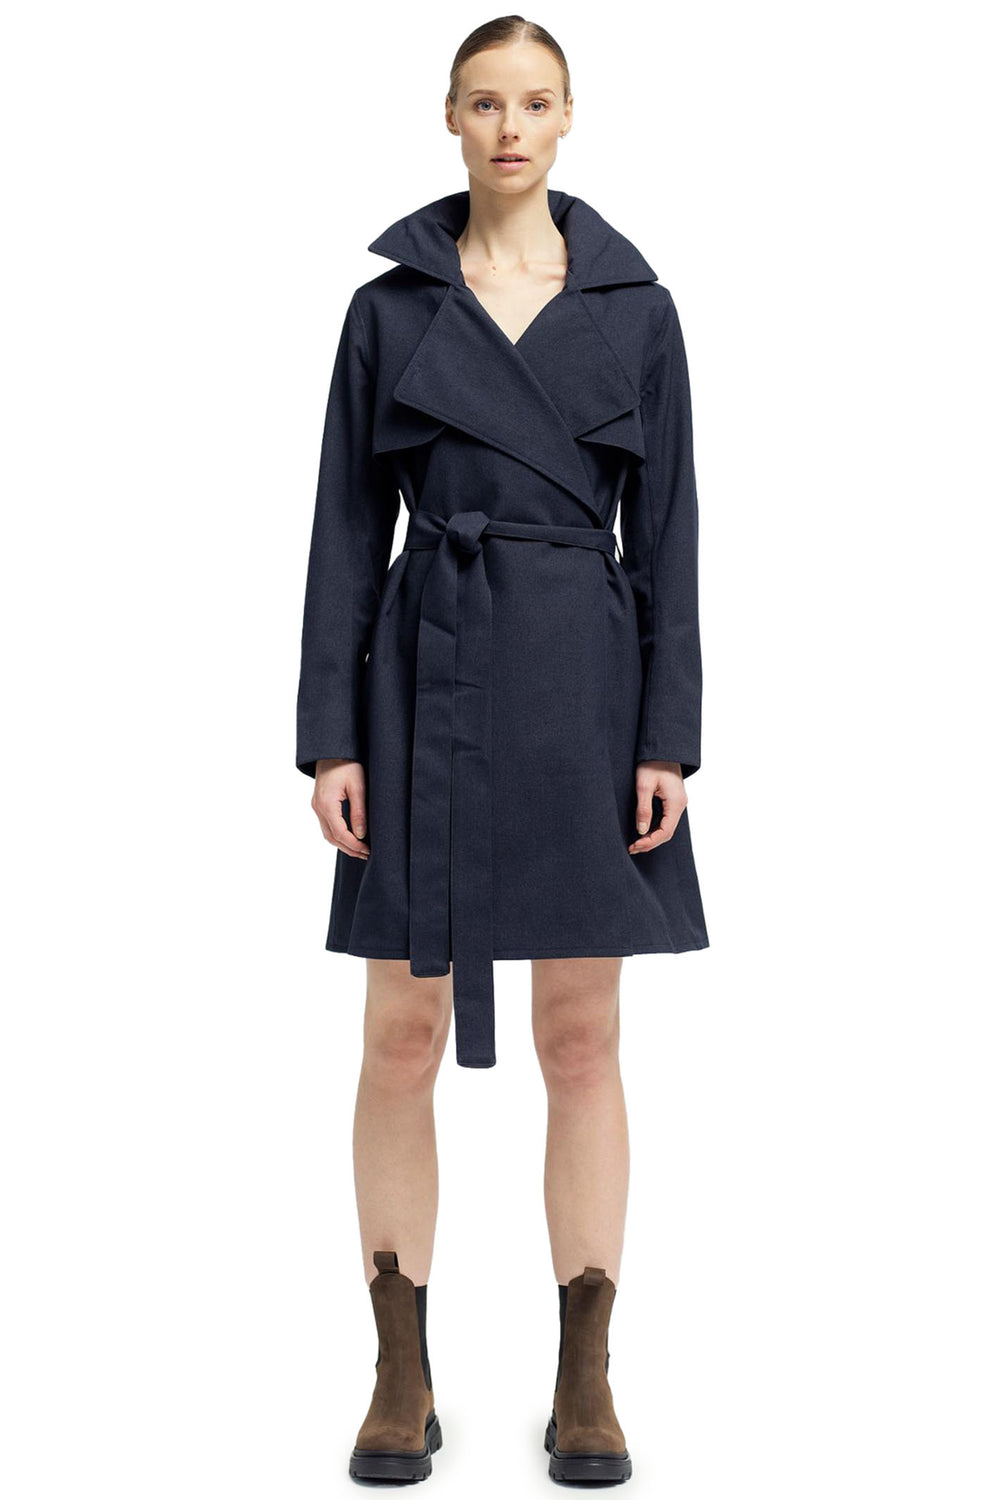 BRGN Yr Coat Dark Navy 15007A2 795 - Olivia Grace Fashion